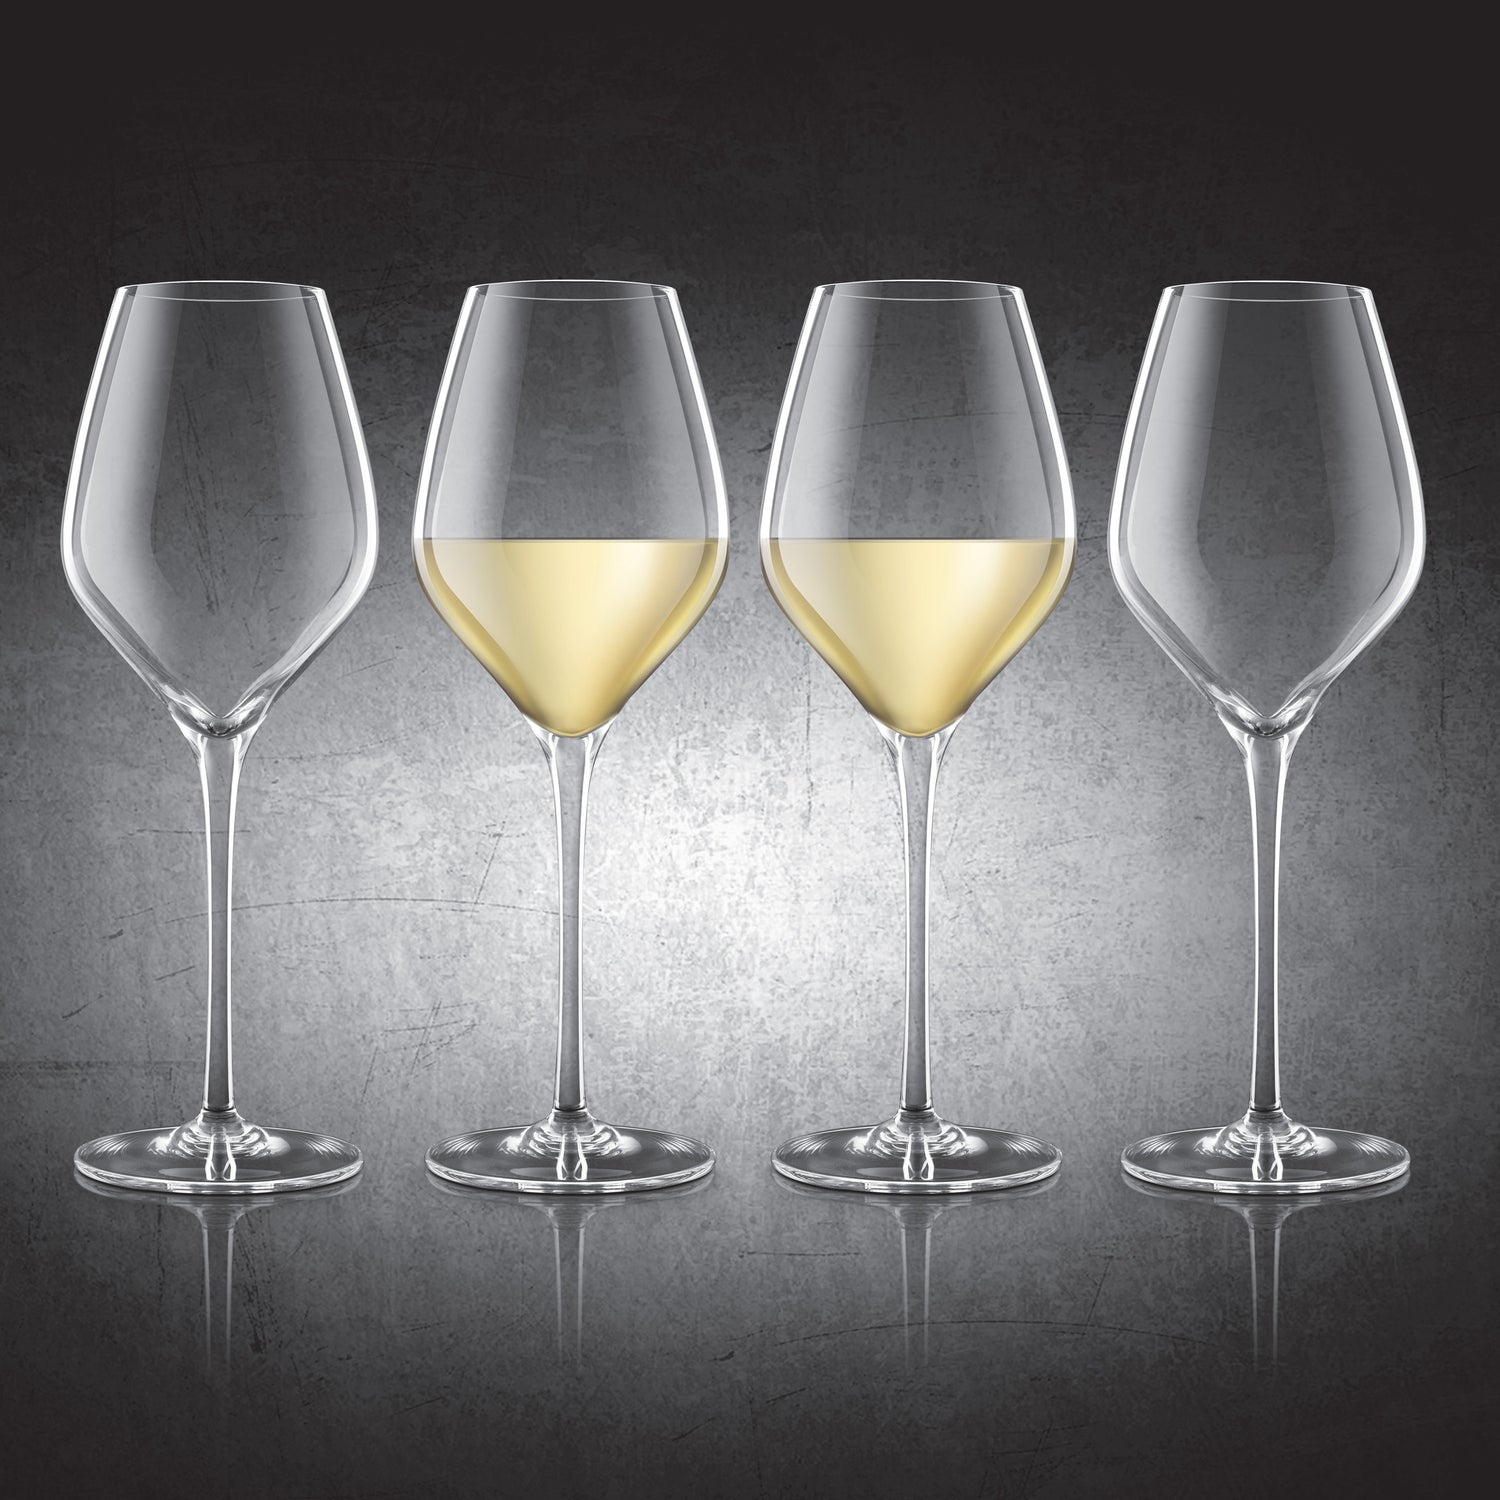 White Wine Lead-Free Crystal Glasses - Set of 4